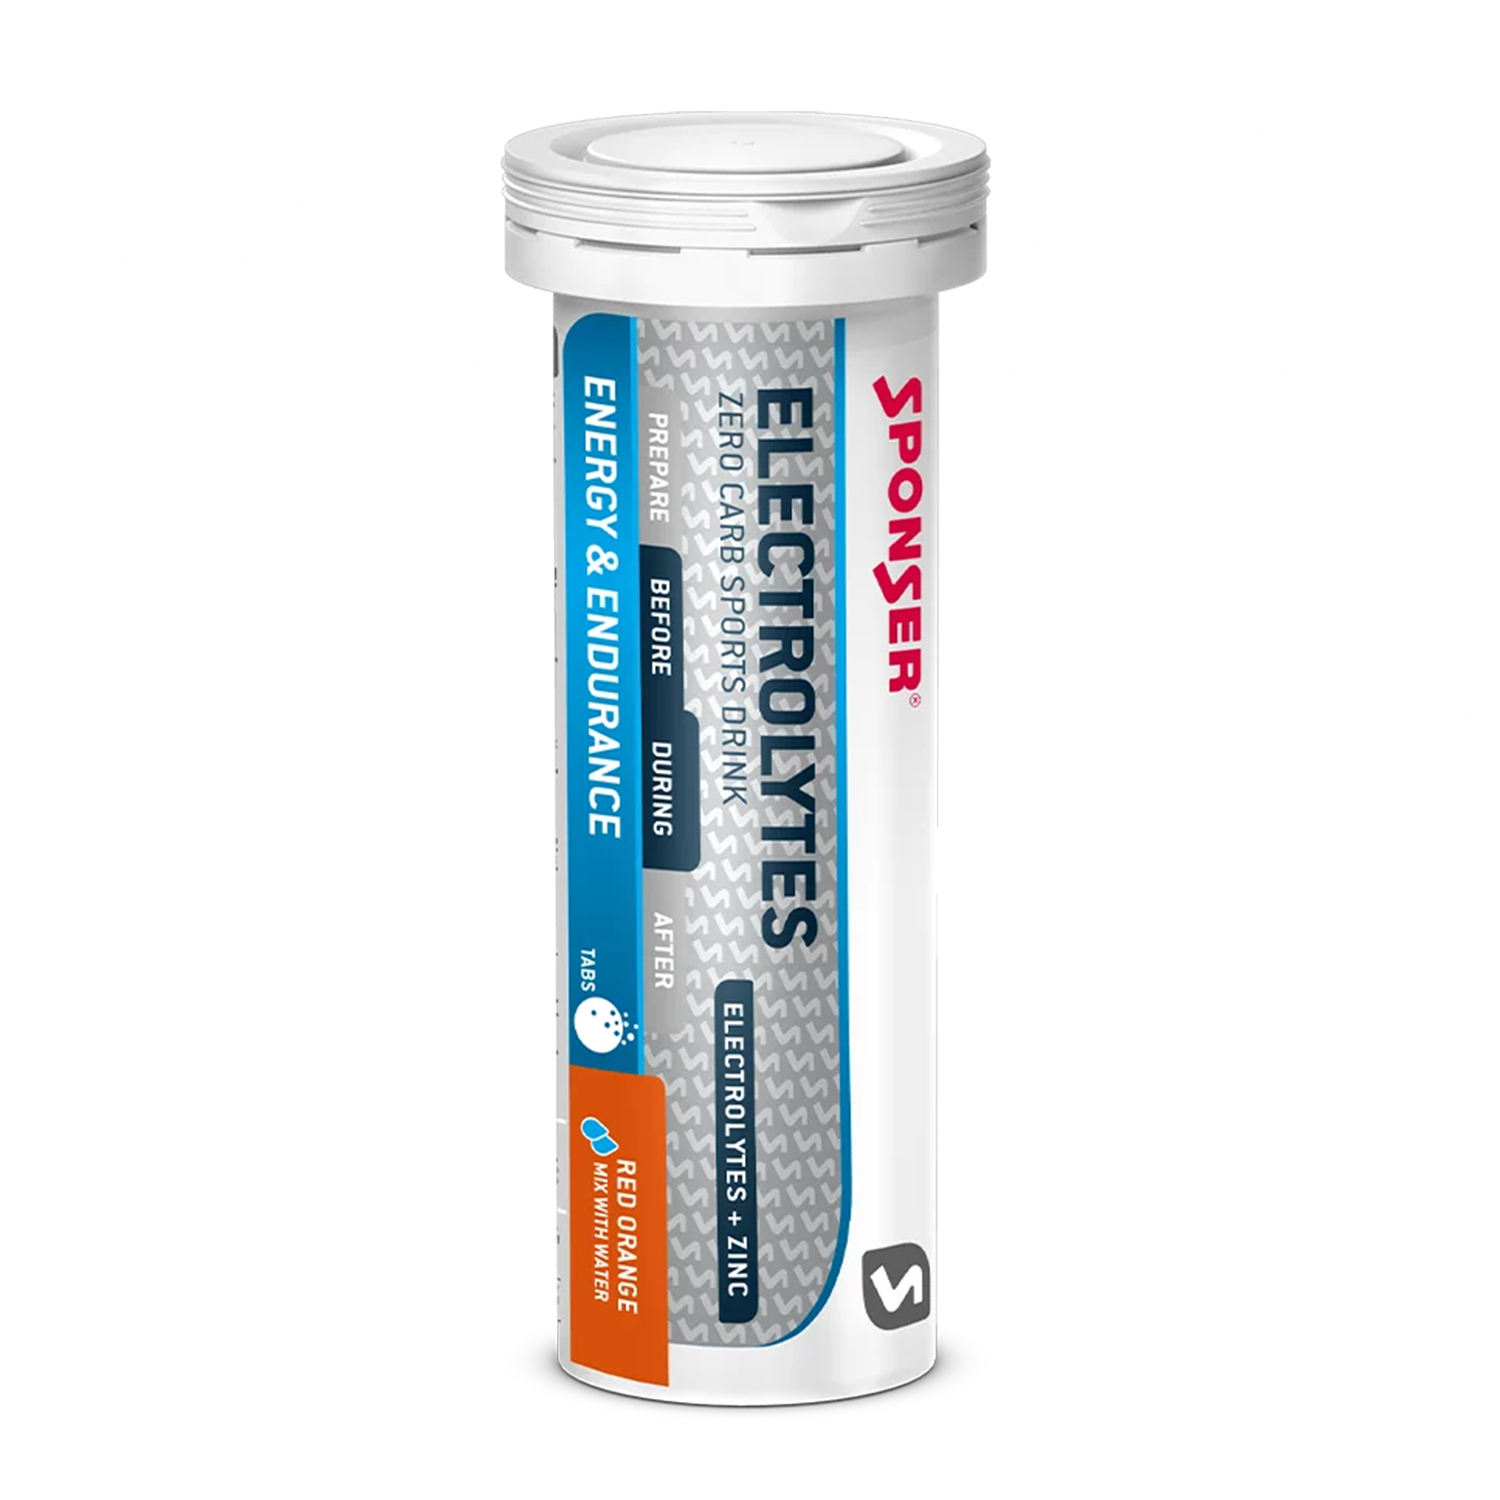 Sponser electrolitos tubo 10 tabletas